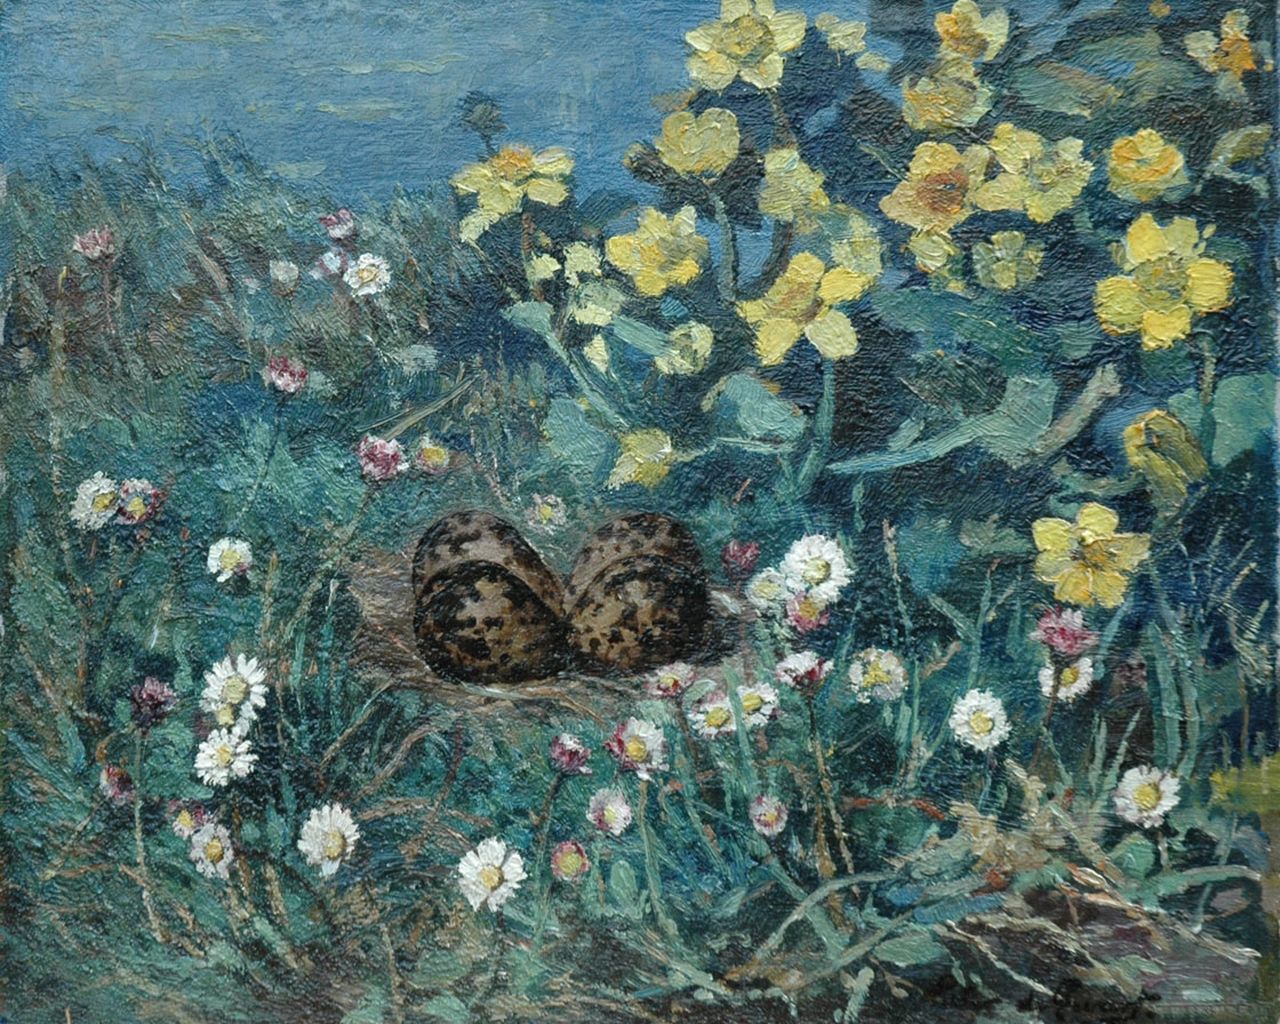 Zwart P.M.A. de | Petrus Martinus Antonius 'Pieter' de Zwart, Plover's egg between fieldflowers, oil on canvas 34.5 x 42.3 cm, signed l.r.